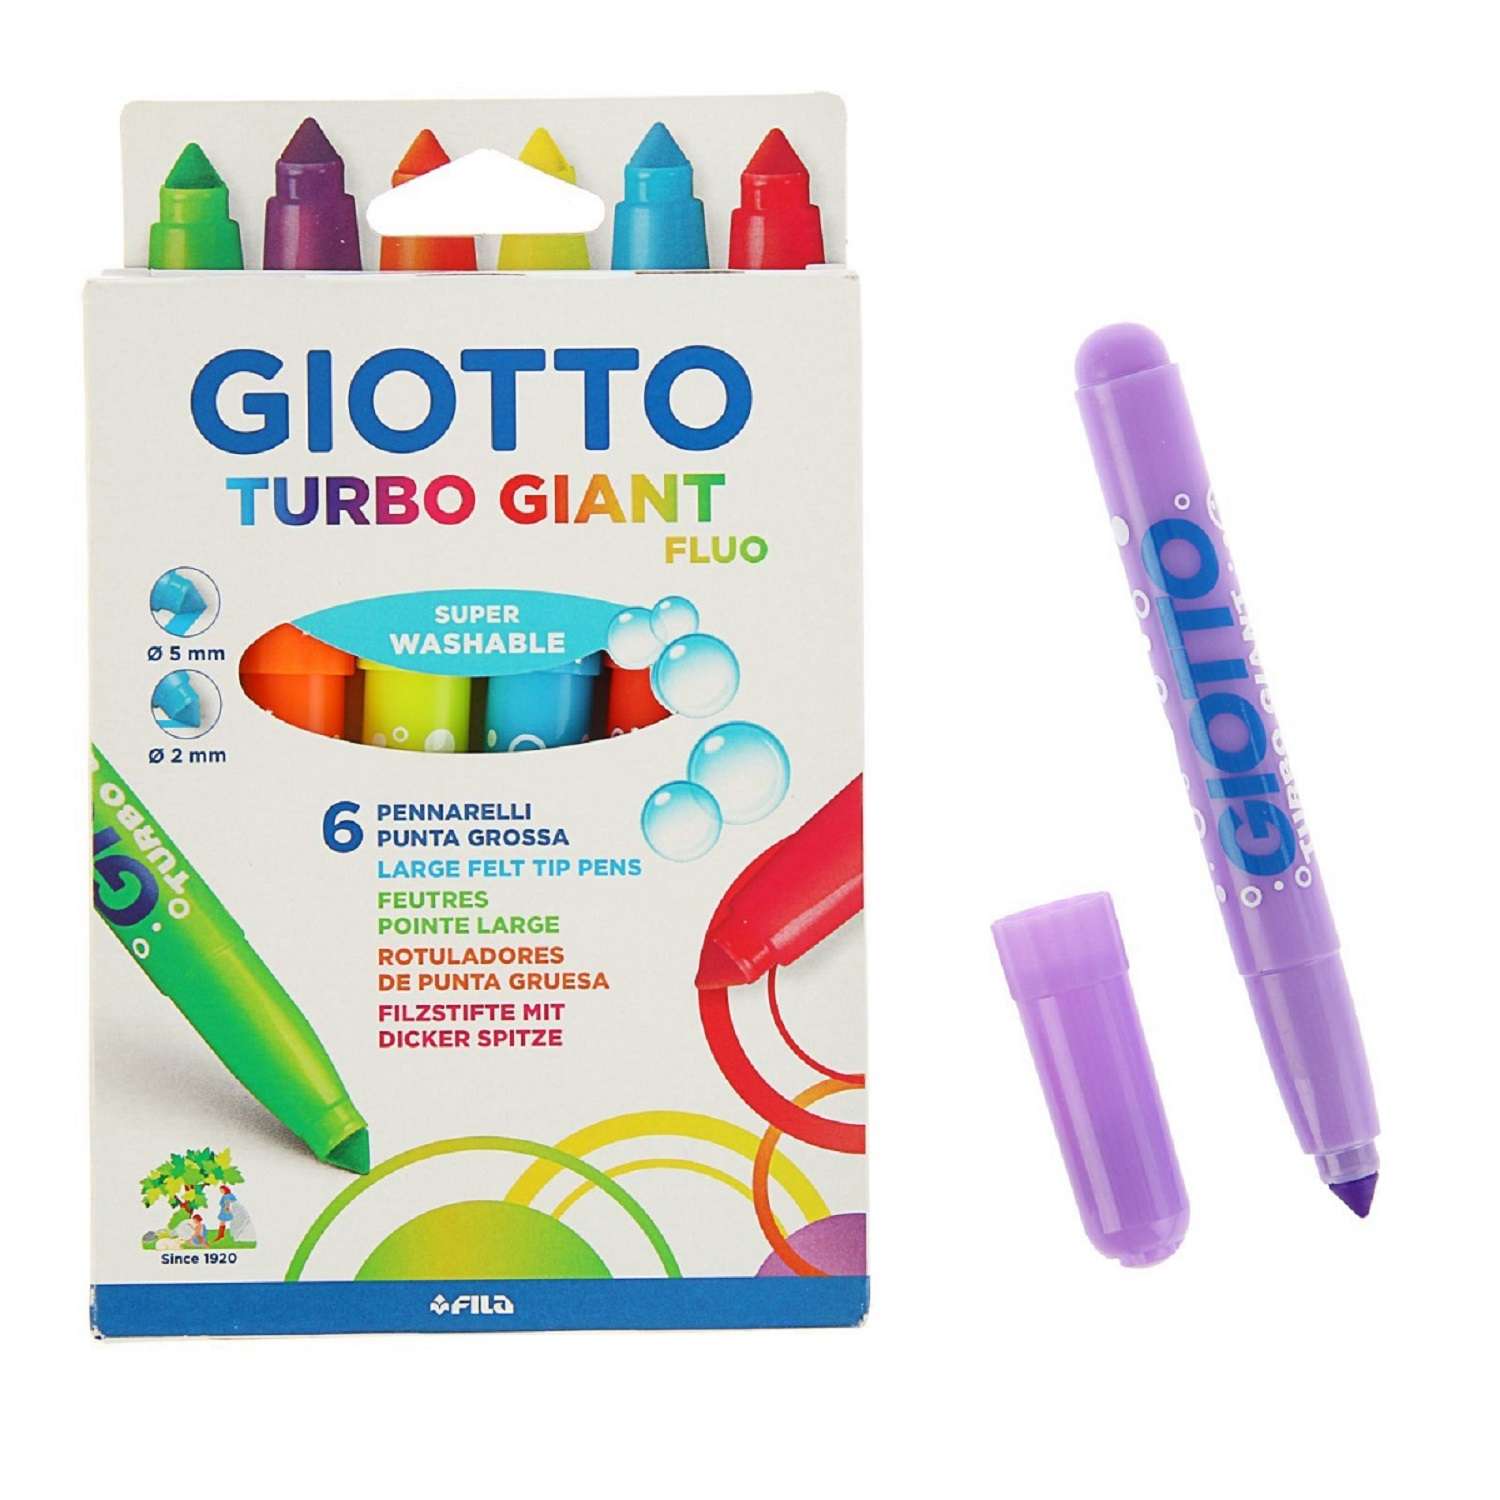 Фломастеры GIOTTO Turbo Giant Fluo утолщенные 6цветов 433000 - фото 2